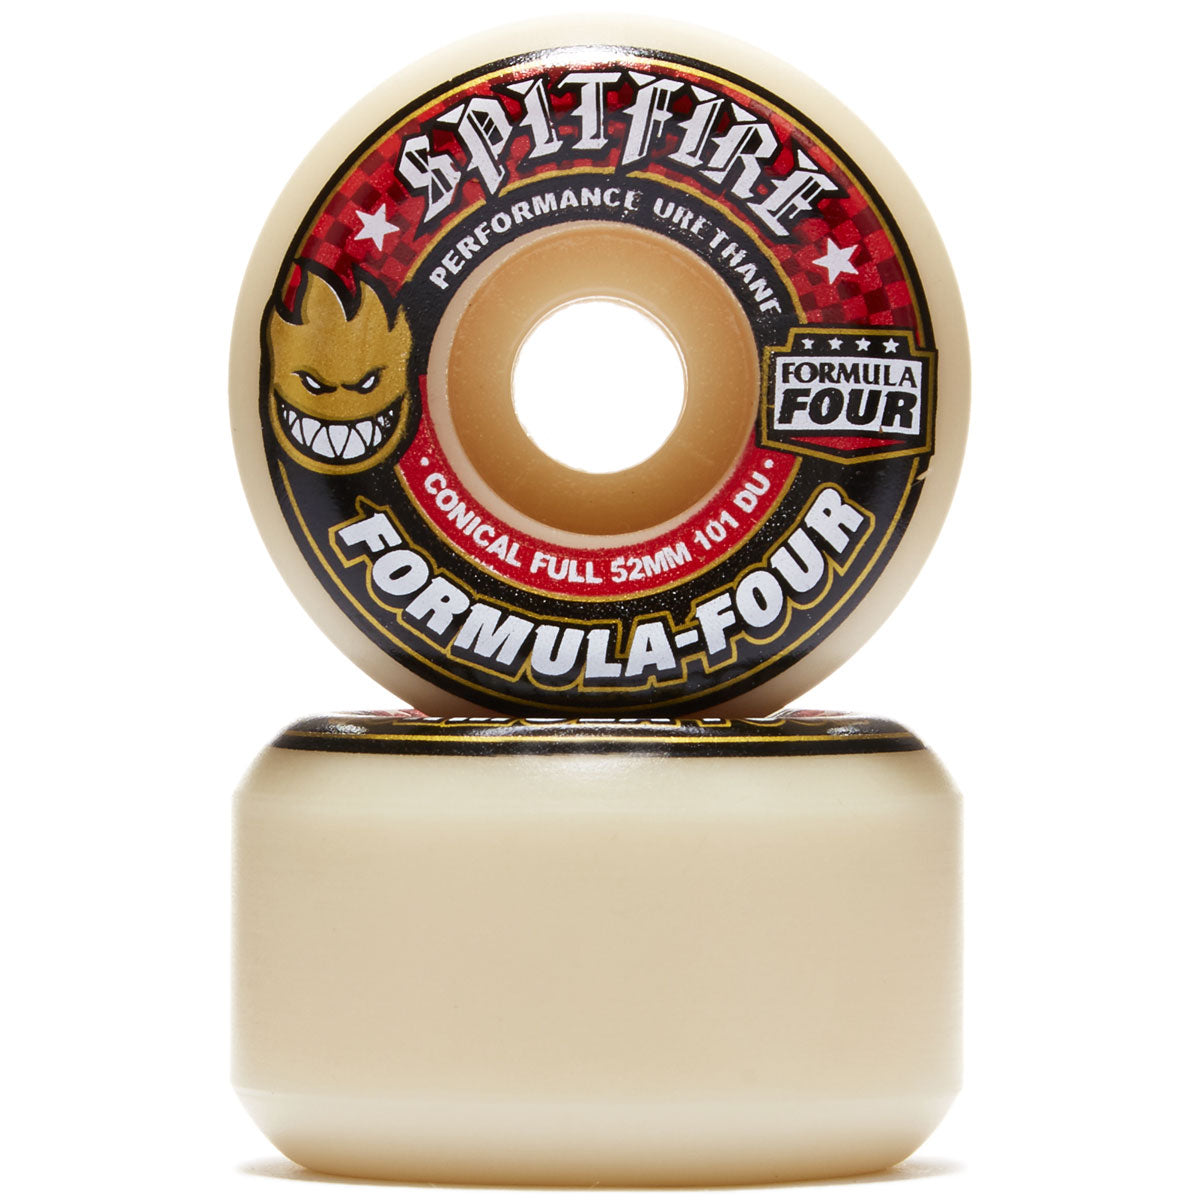 Spitfire F4 101d Conical Full Skateboard Wheels - 52mm image 2